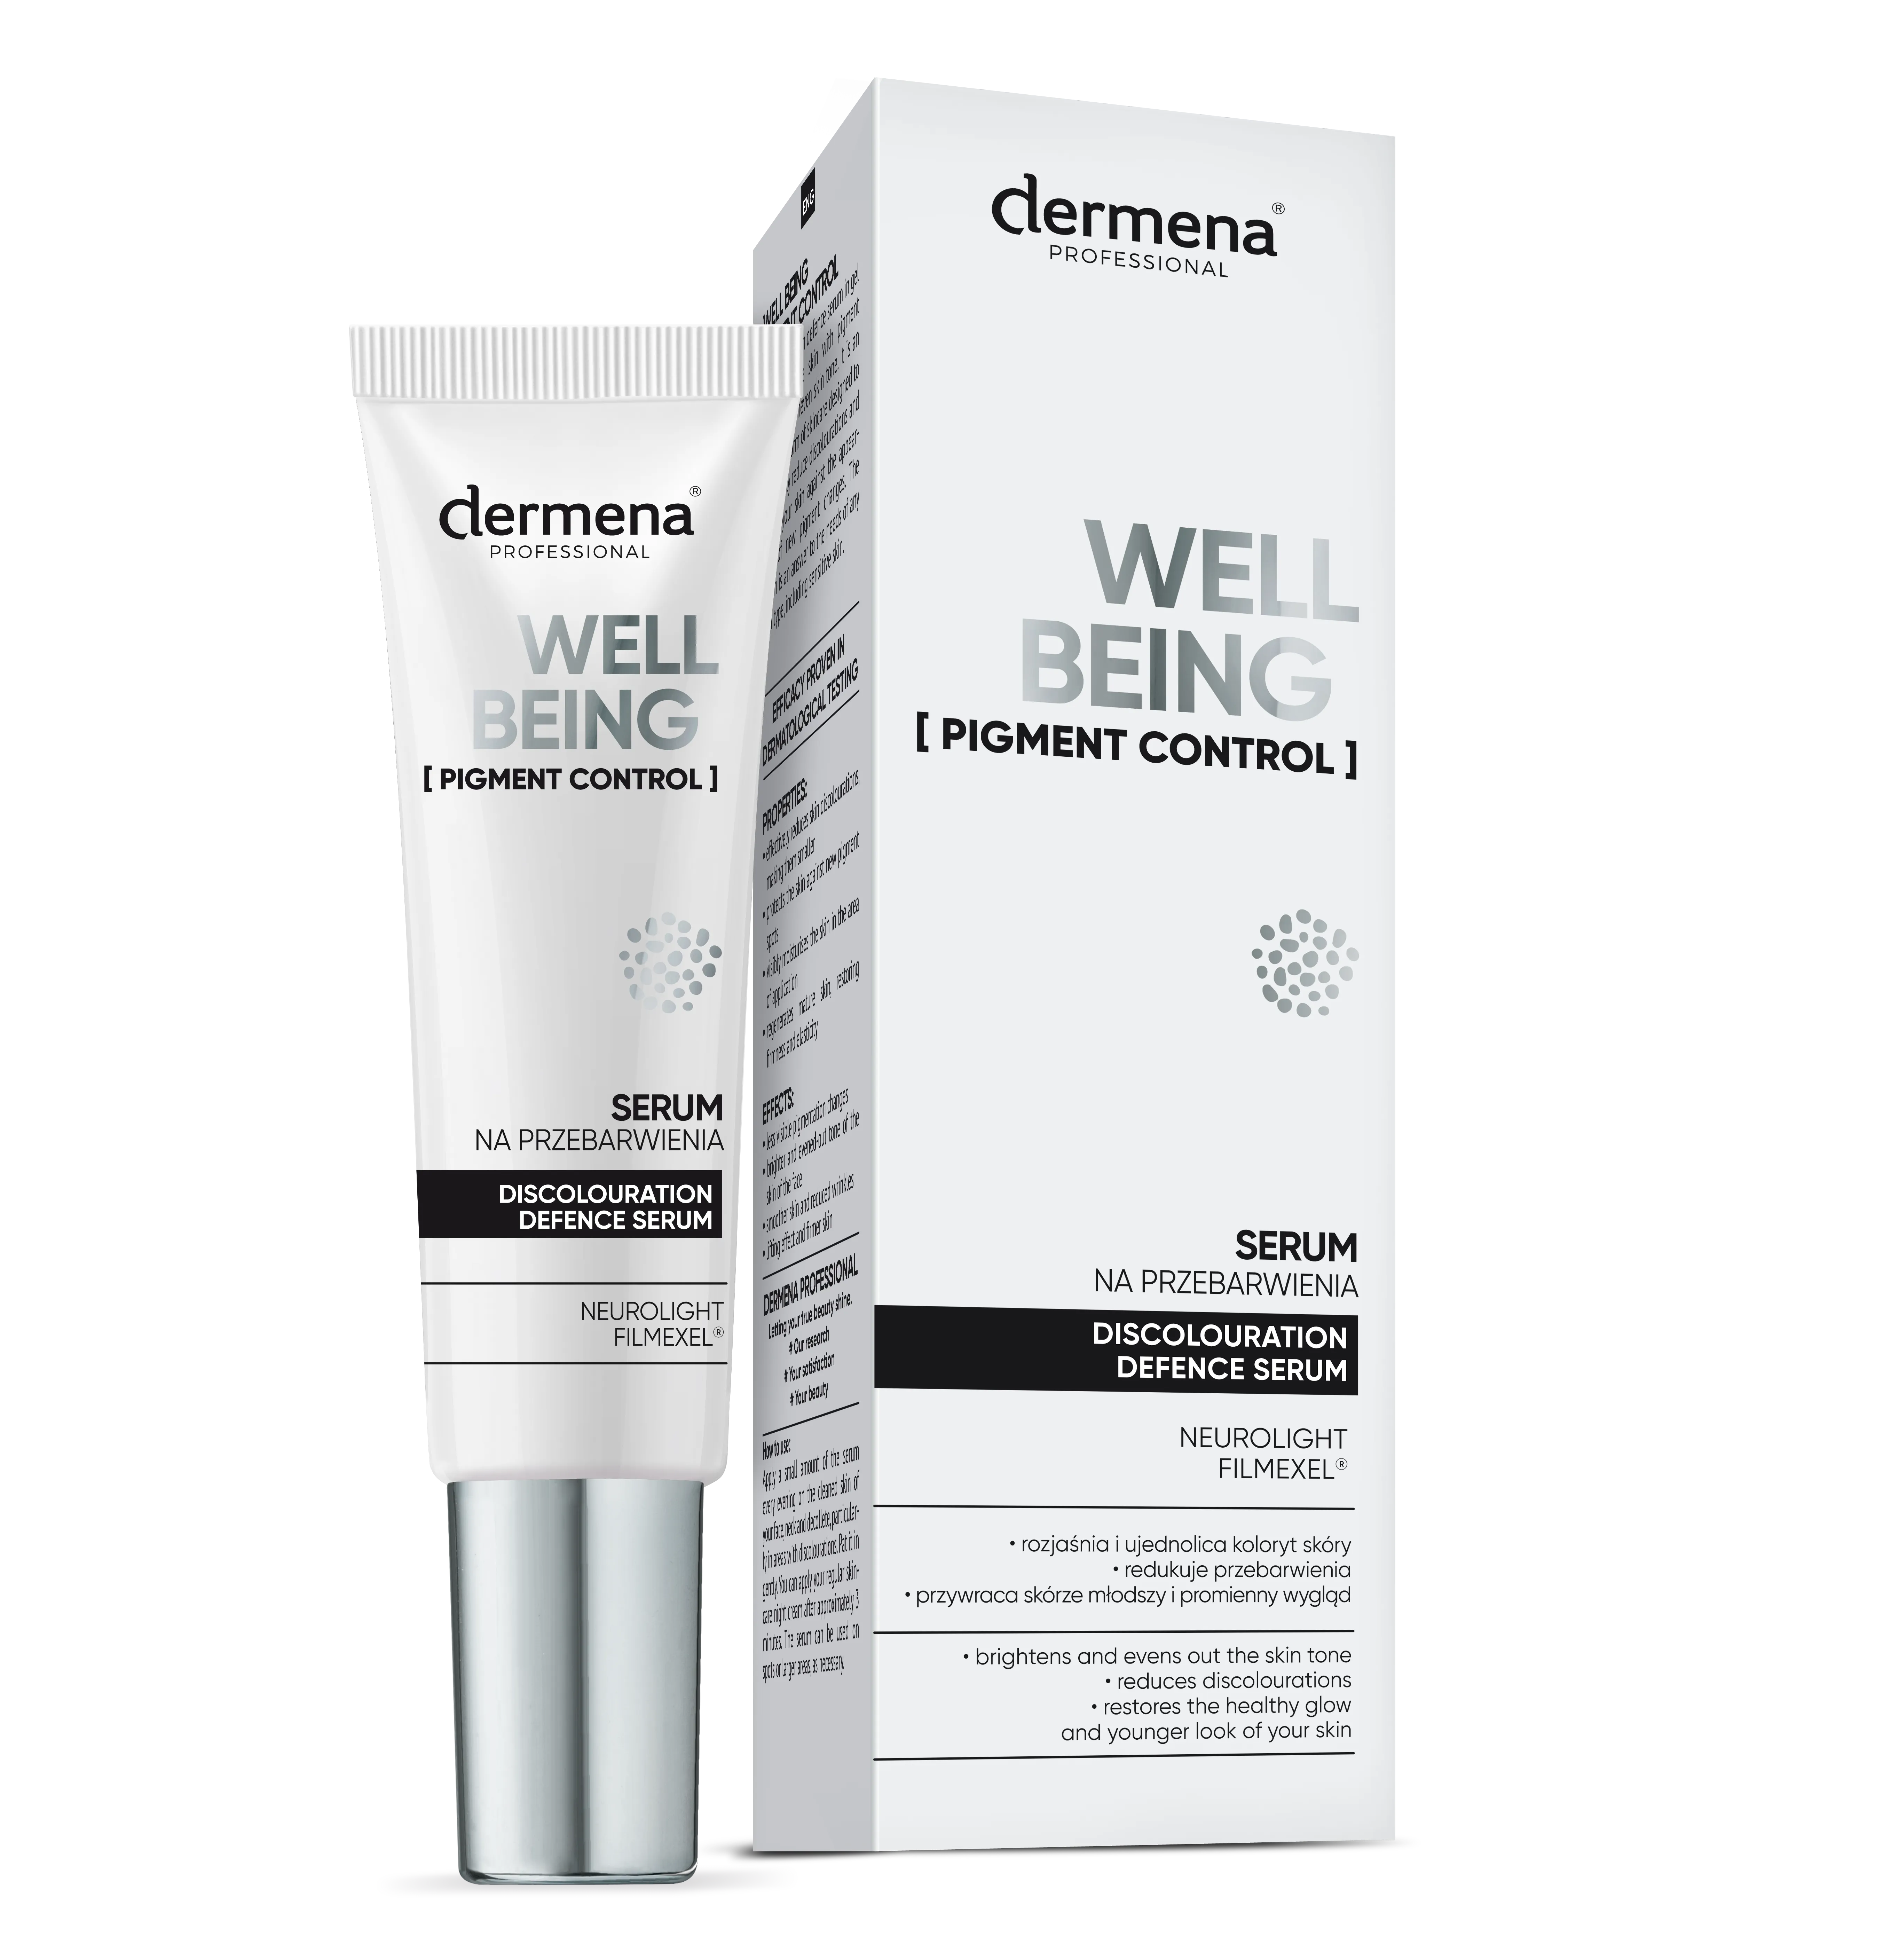 Dermena Professional Well Being Pigment Control serum na przebarwienia, 30 ml